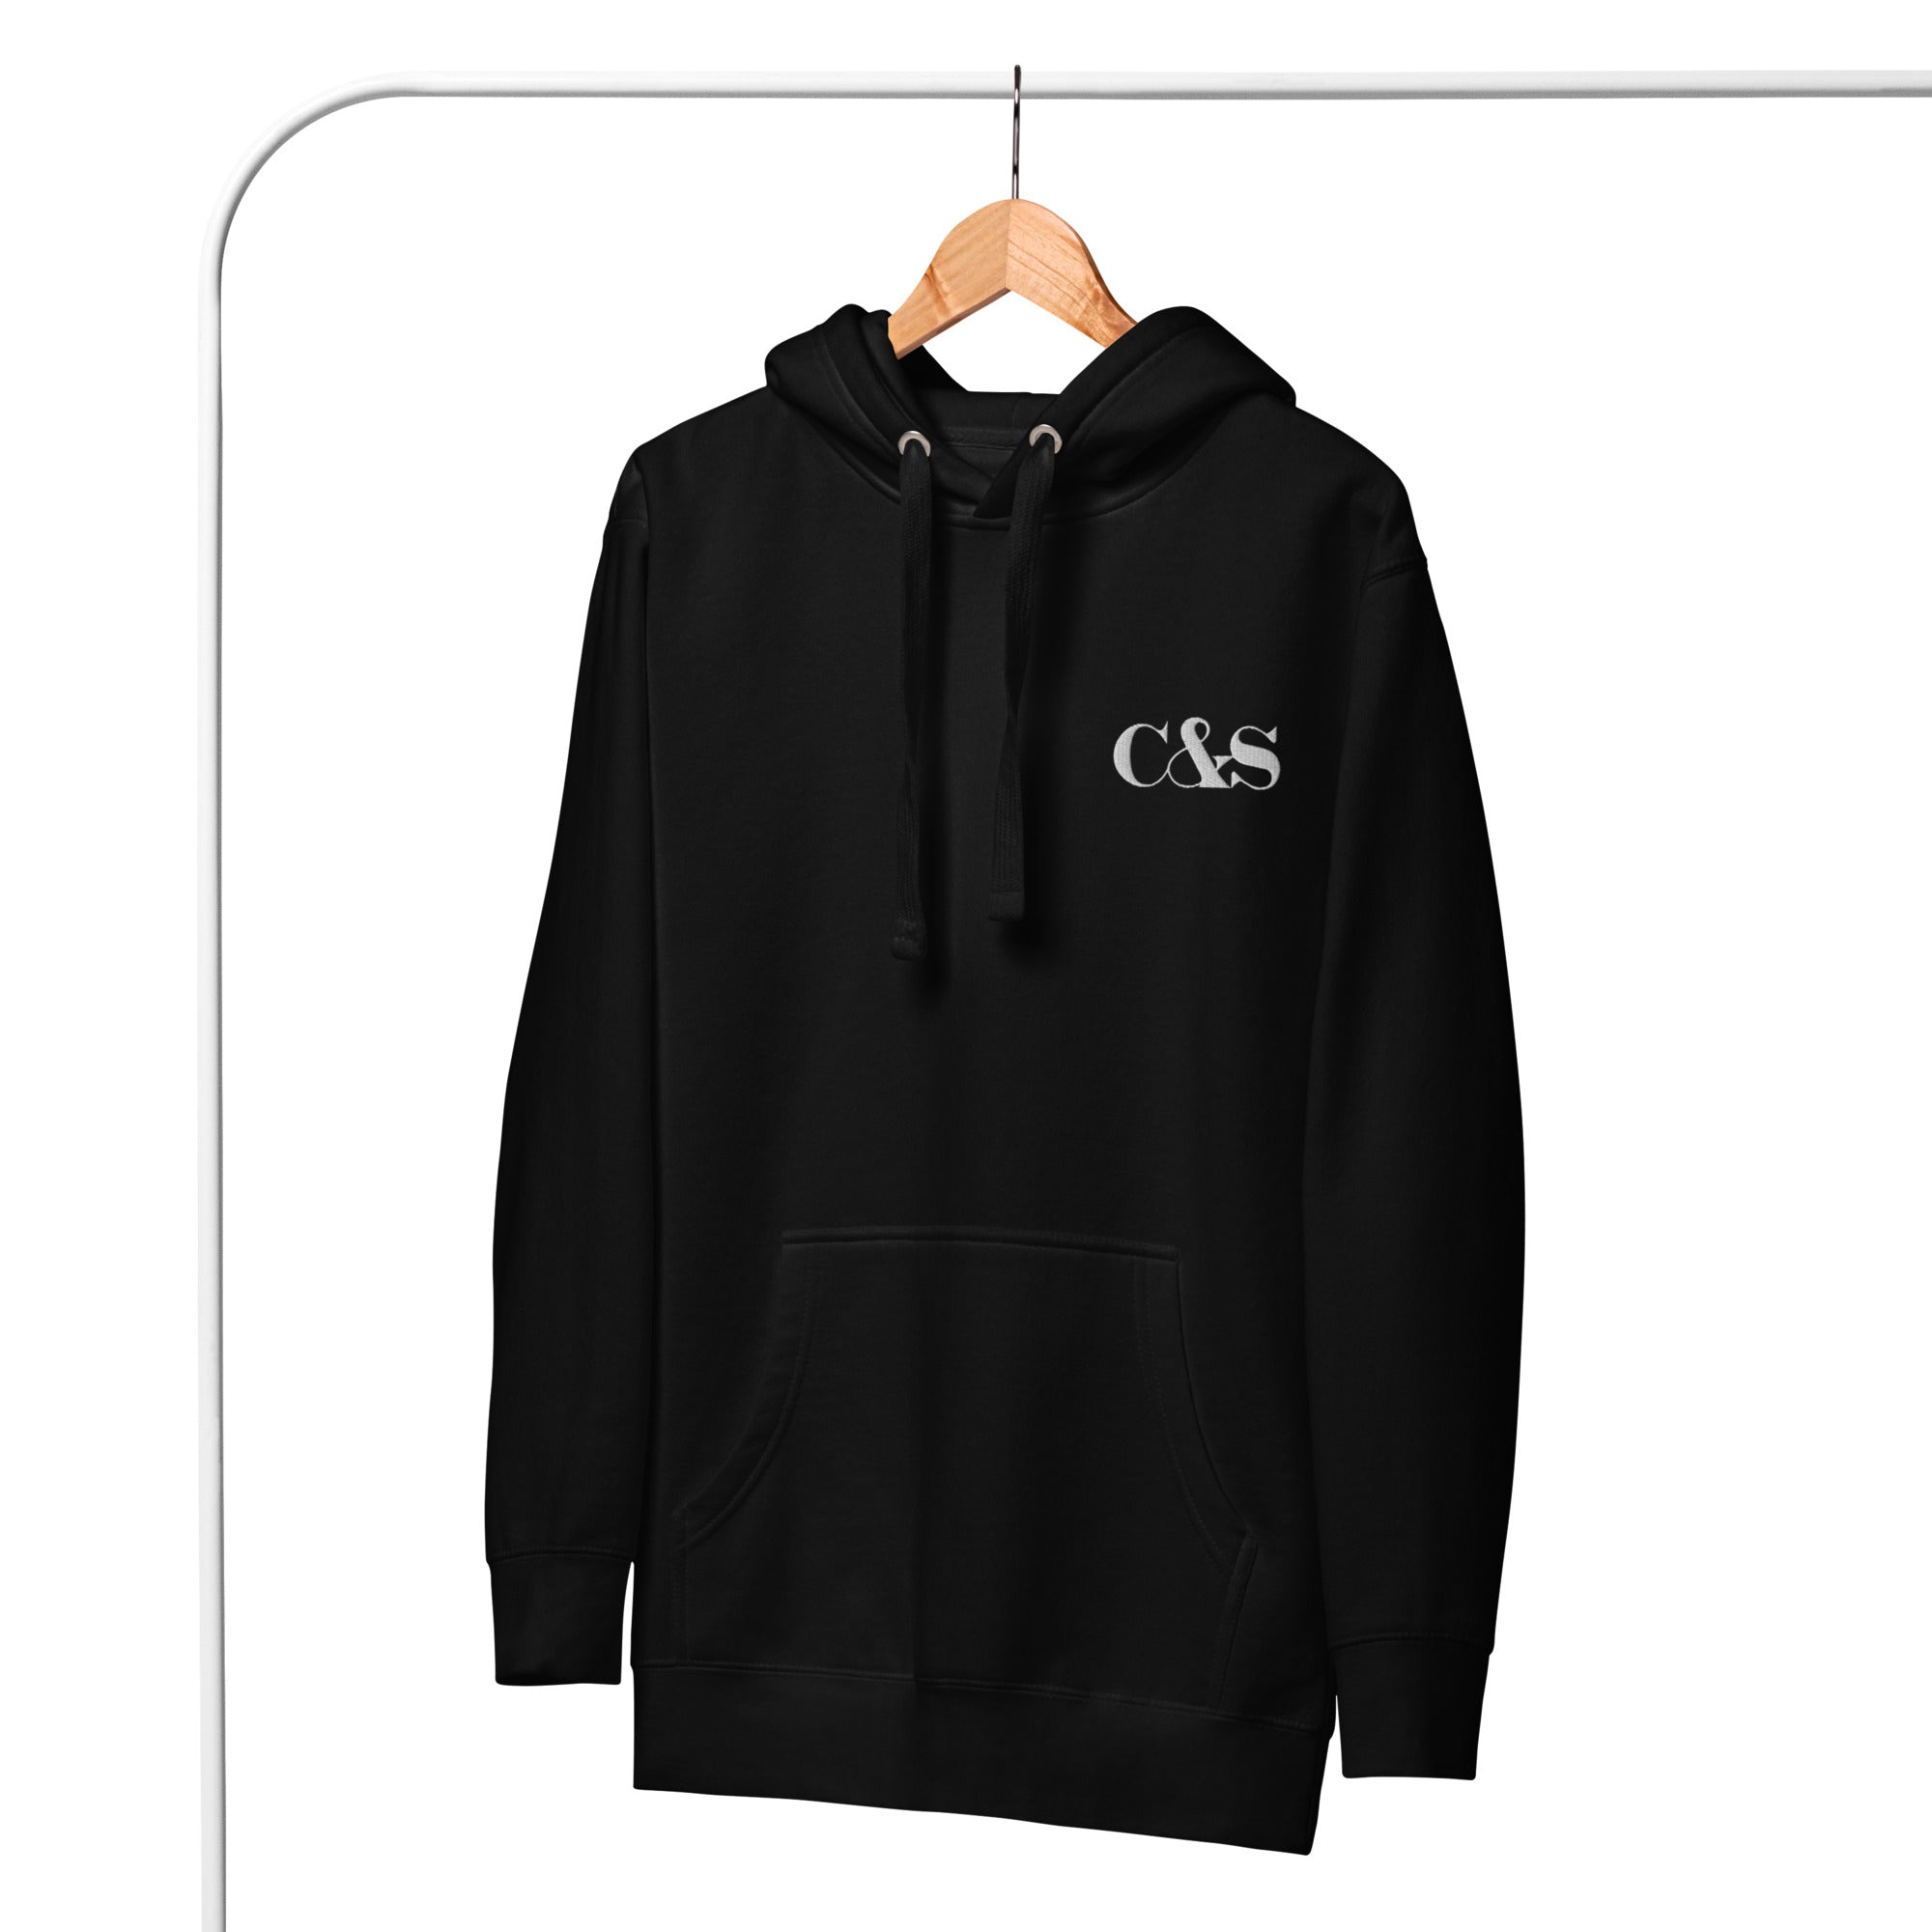 C&S Premium Hoodie (Embroidered)